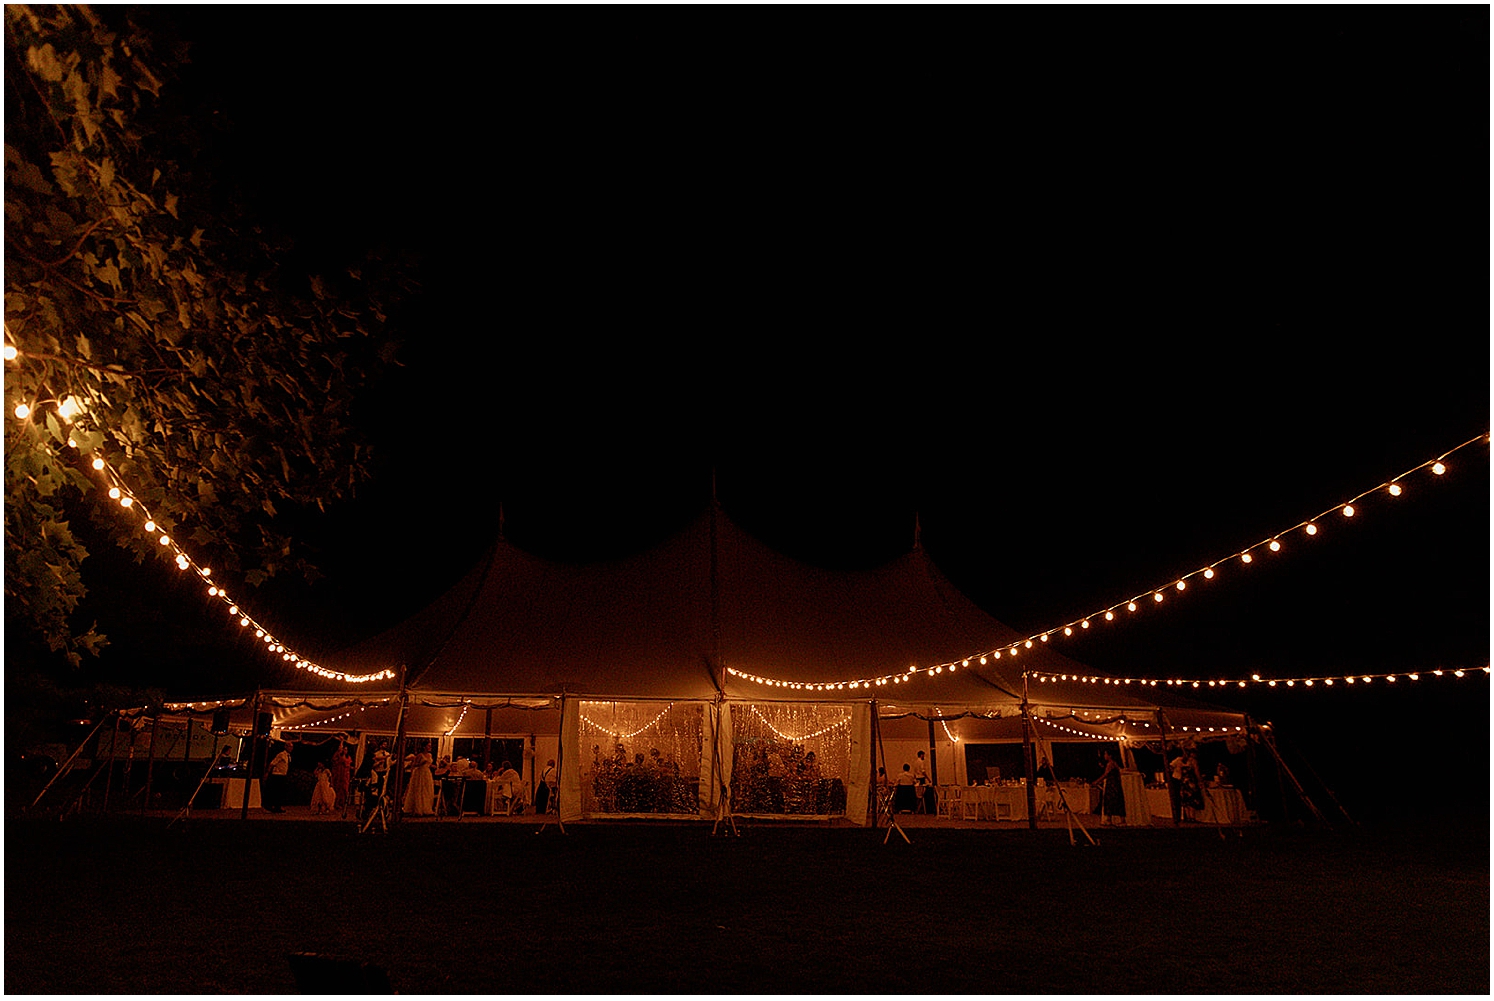 Moraine-Farm-wedding-reception-tent